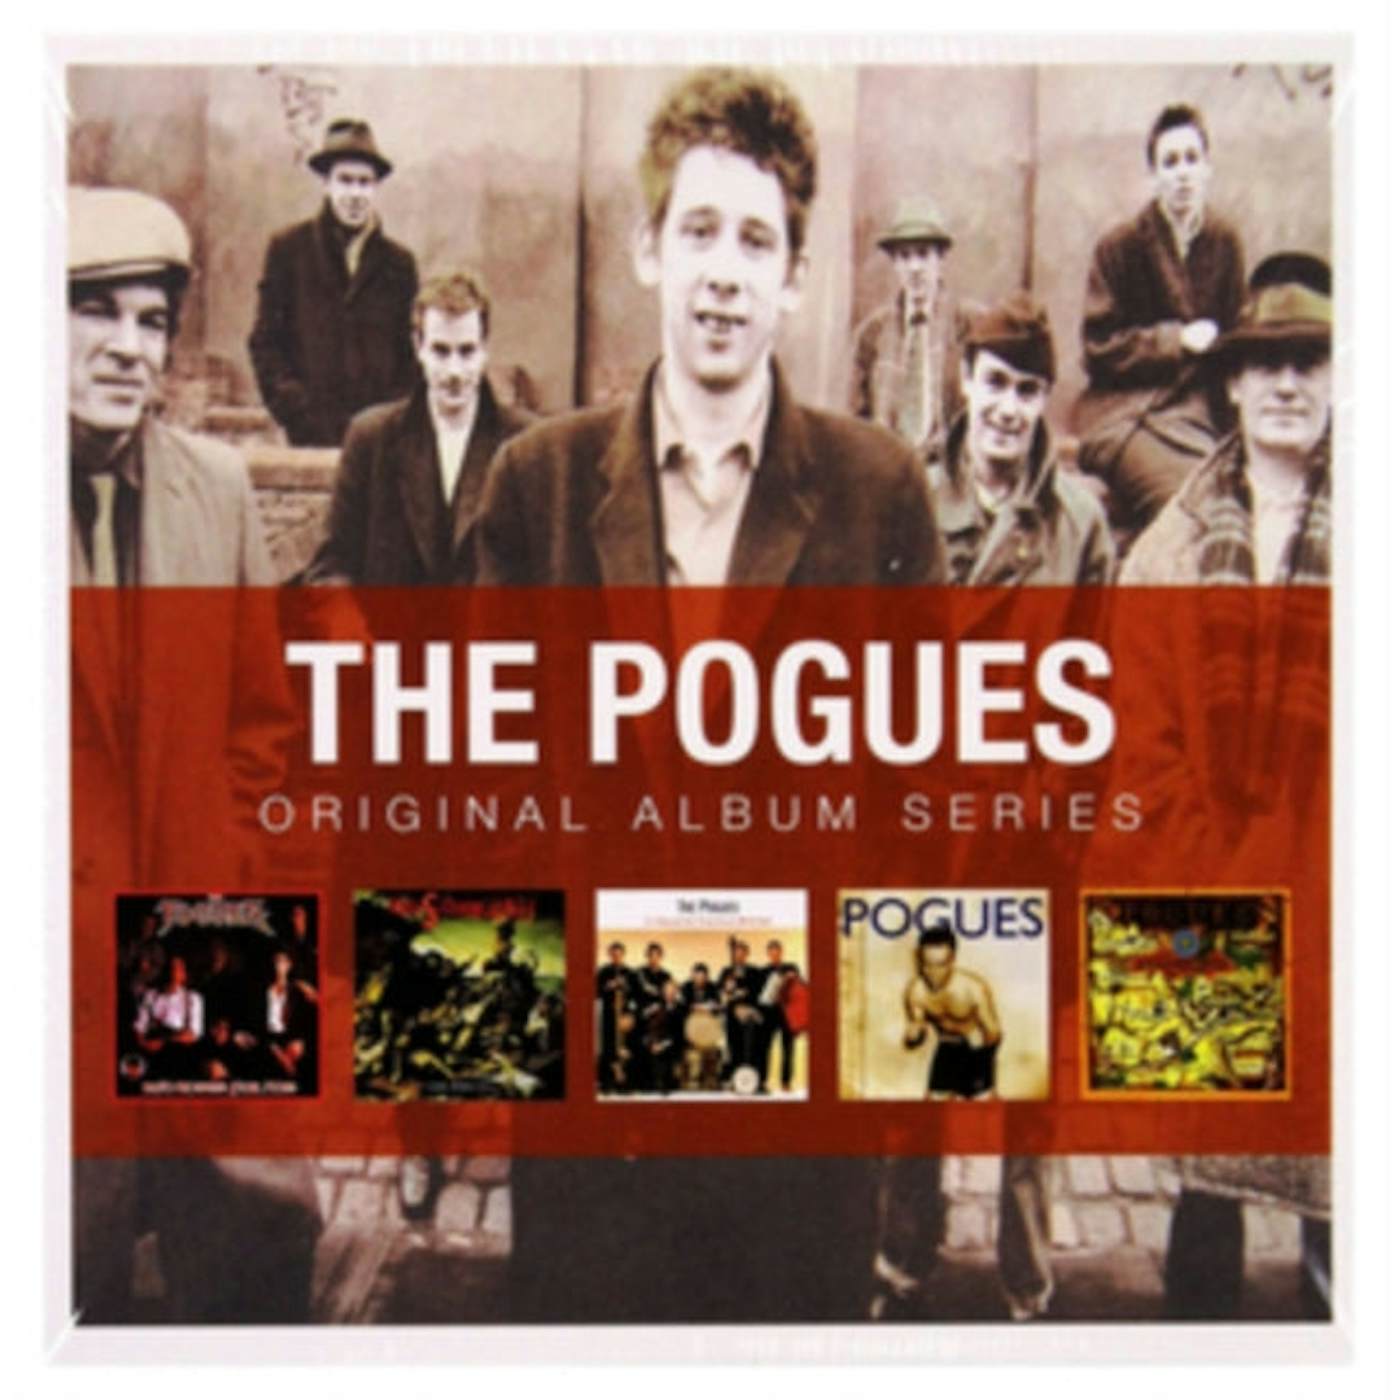 The Pogues CD - Original Album Series